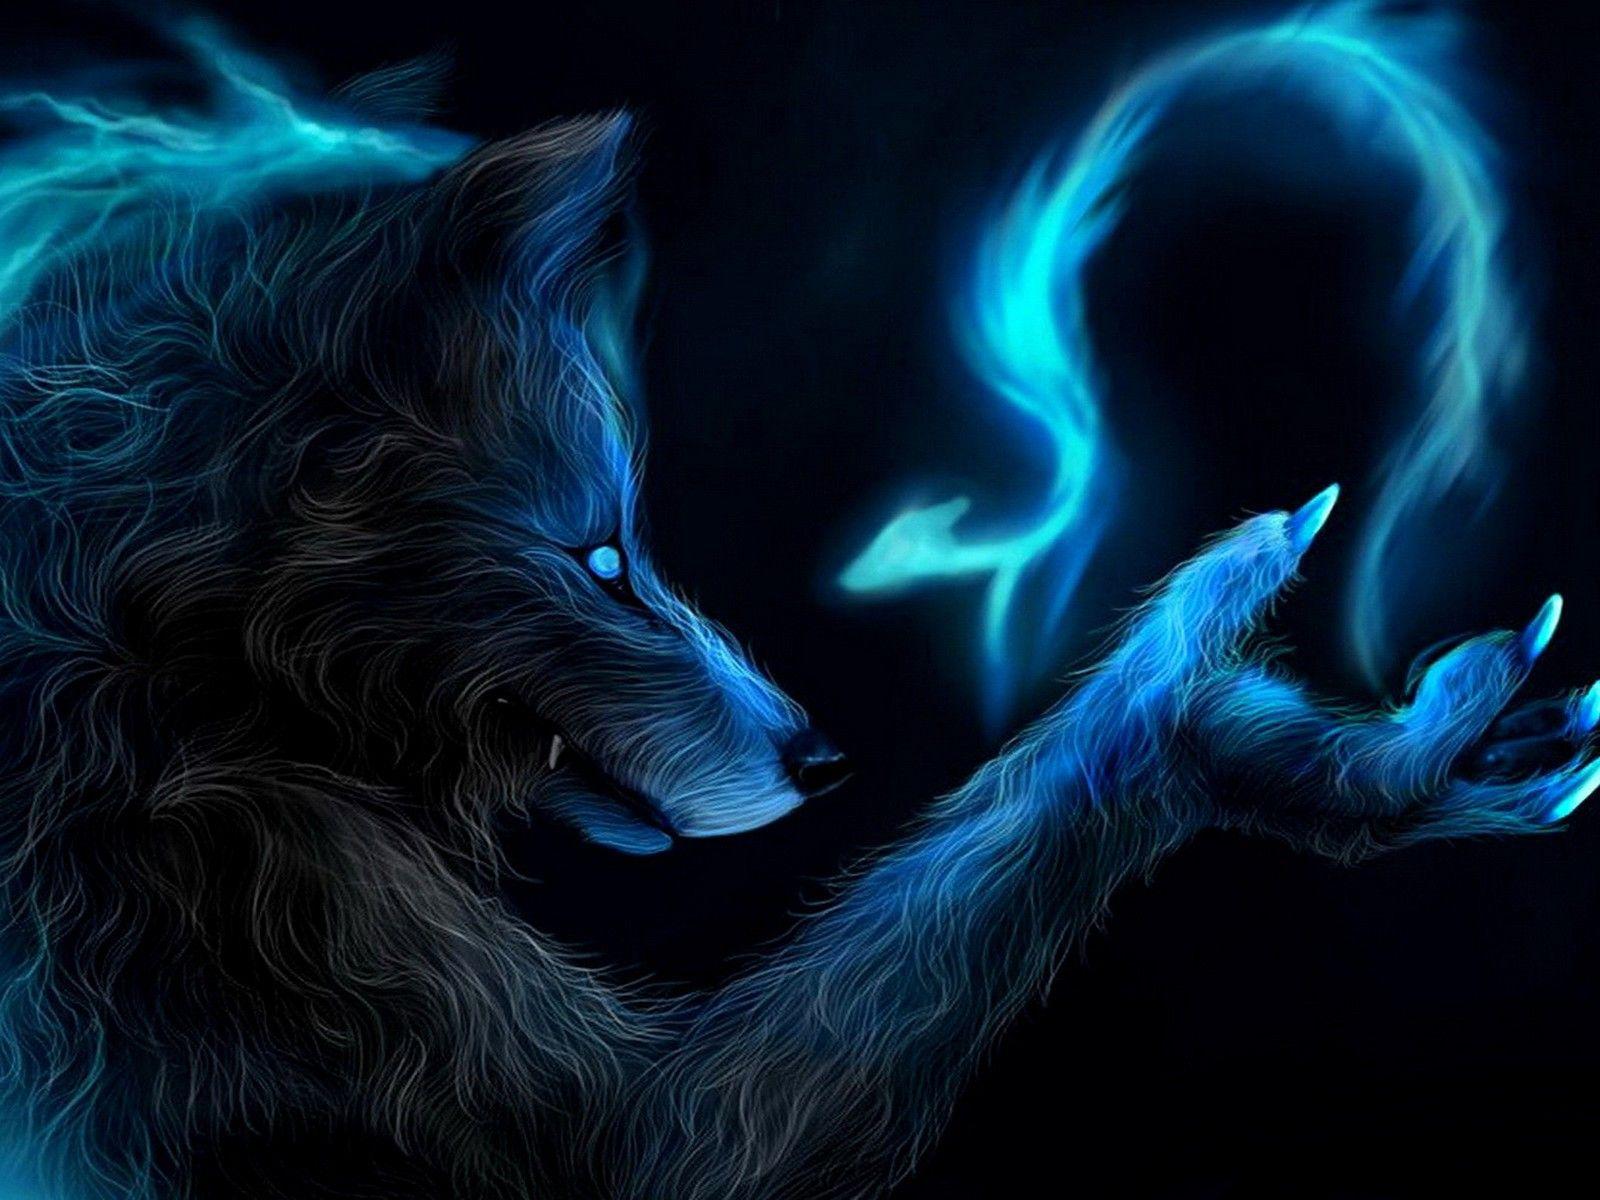 Animals magic wolves wallpaper. PC